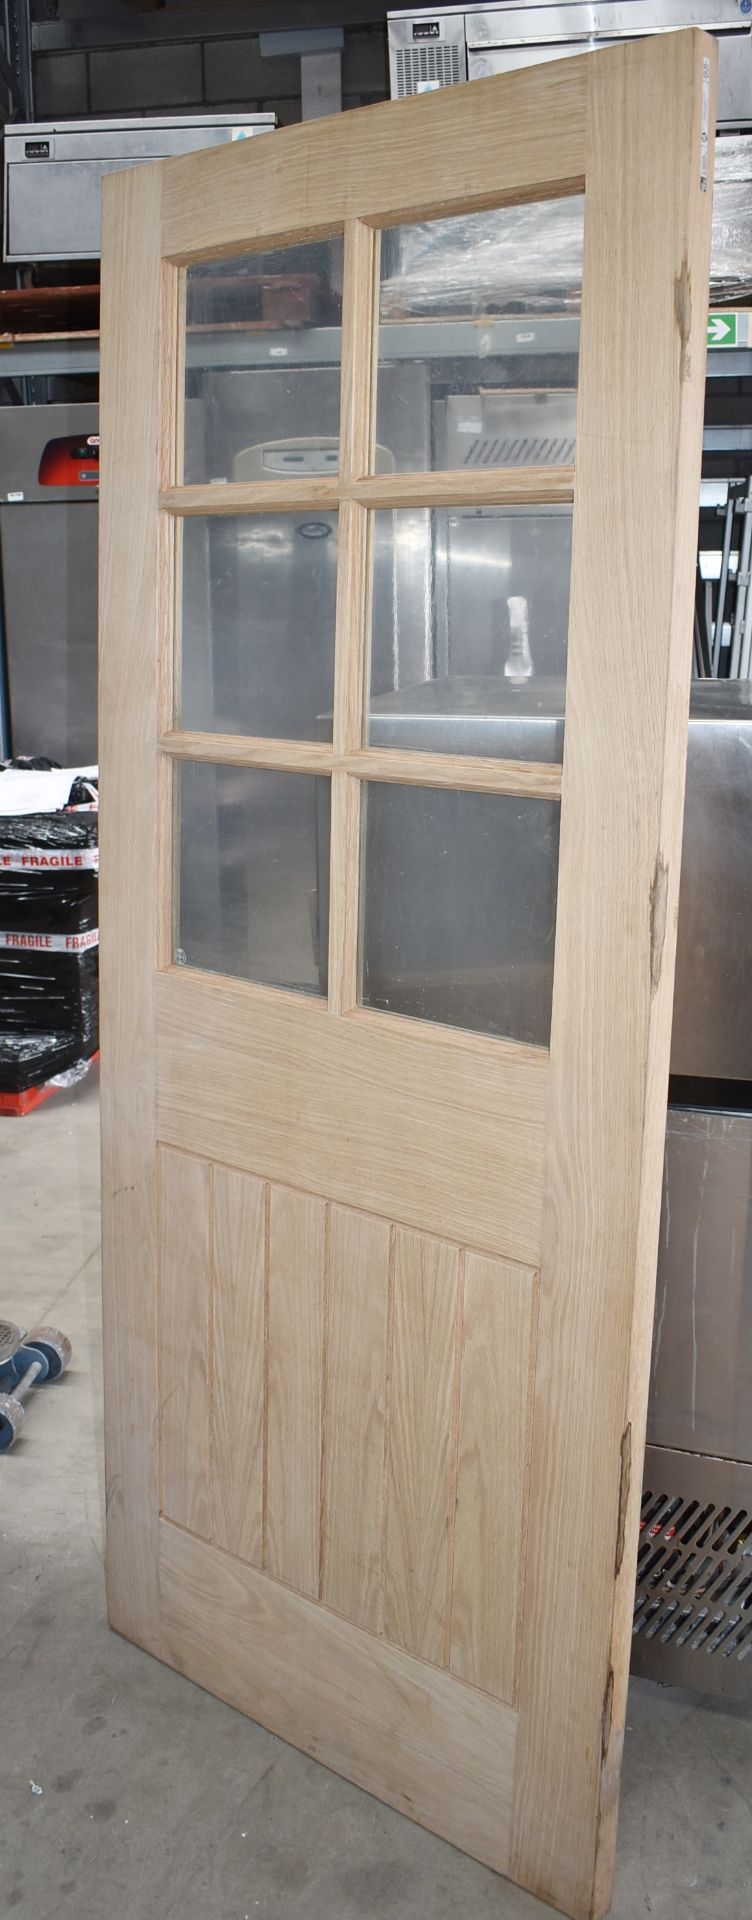 1 x Solid Oak Suffolk Internal FD30 Fire Door by XL Joinery - Unused - Size: 198x84x4.5 cms - - Image 4 of 6